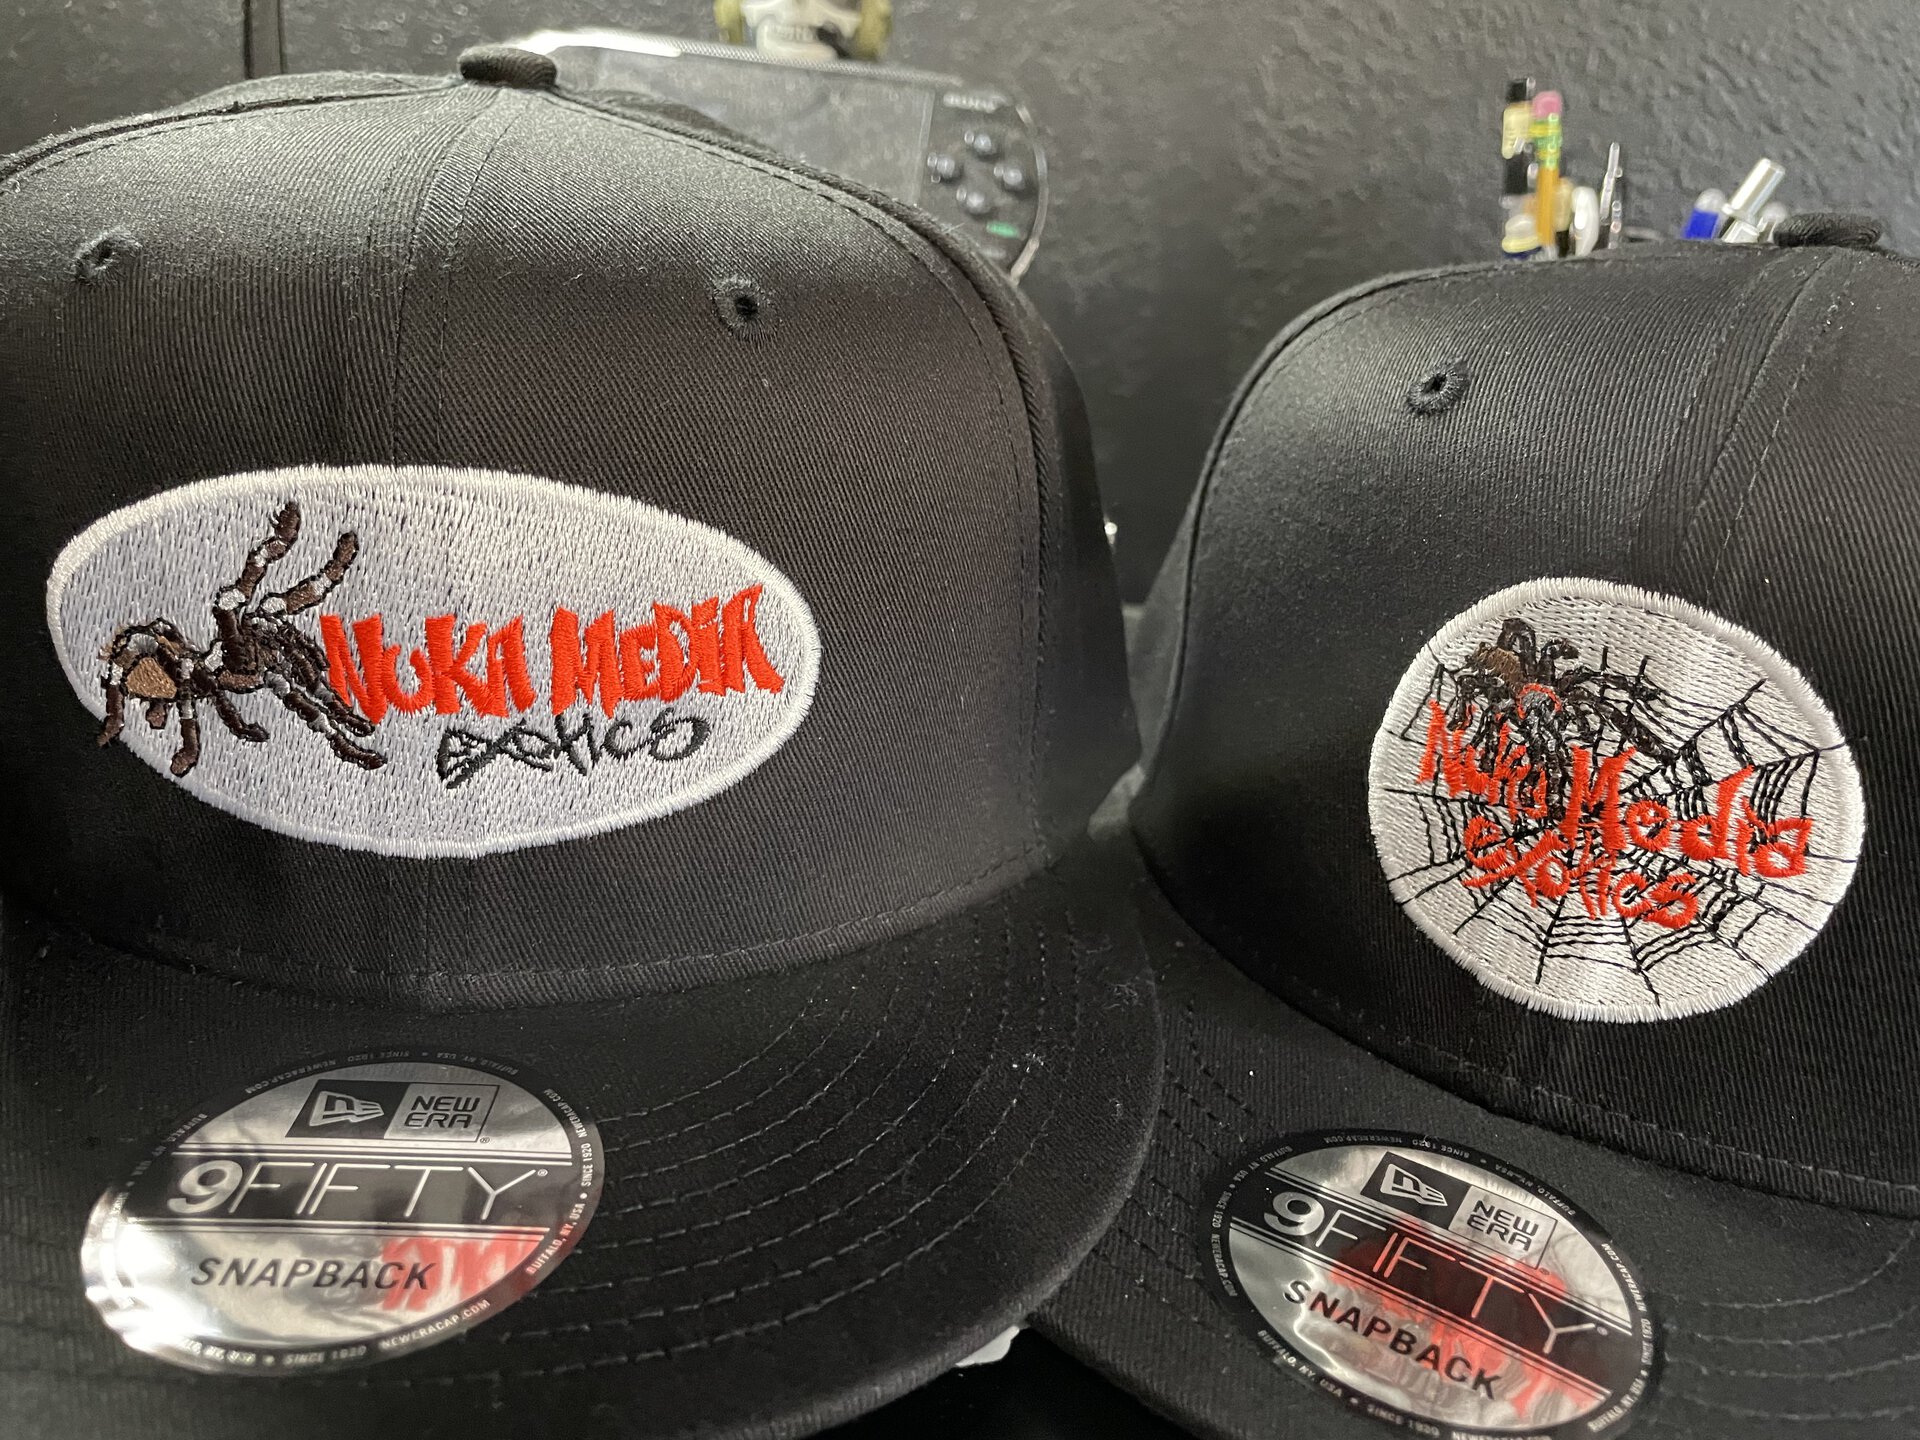 NukaMedia Exotics Custom Tarantula Hats